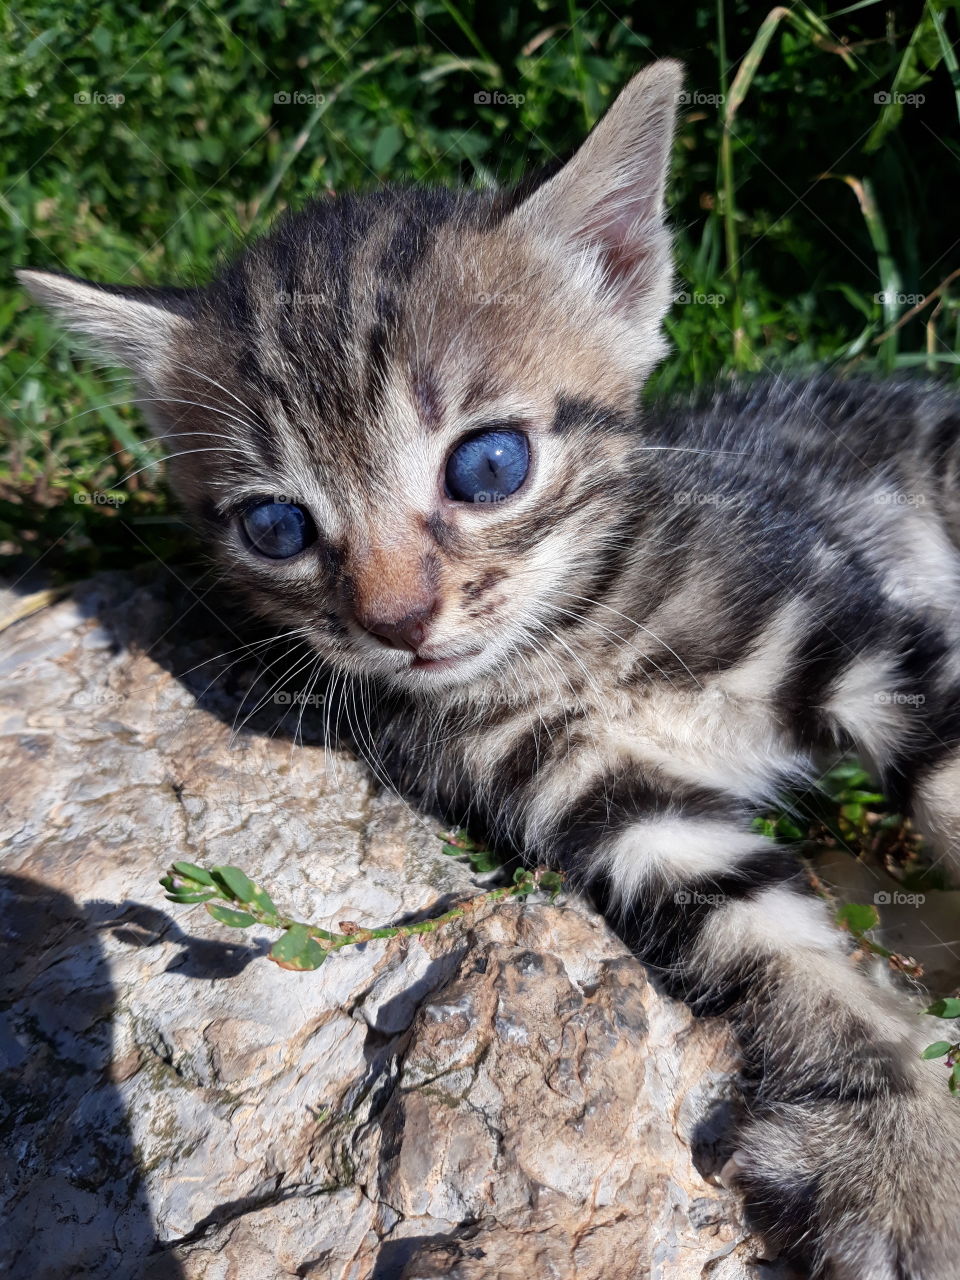 Blue eyed baby cat